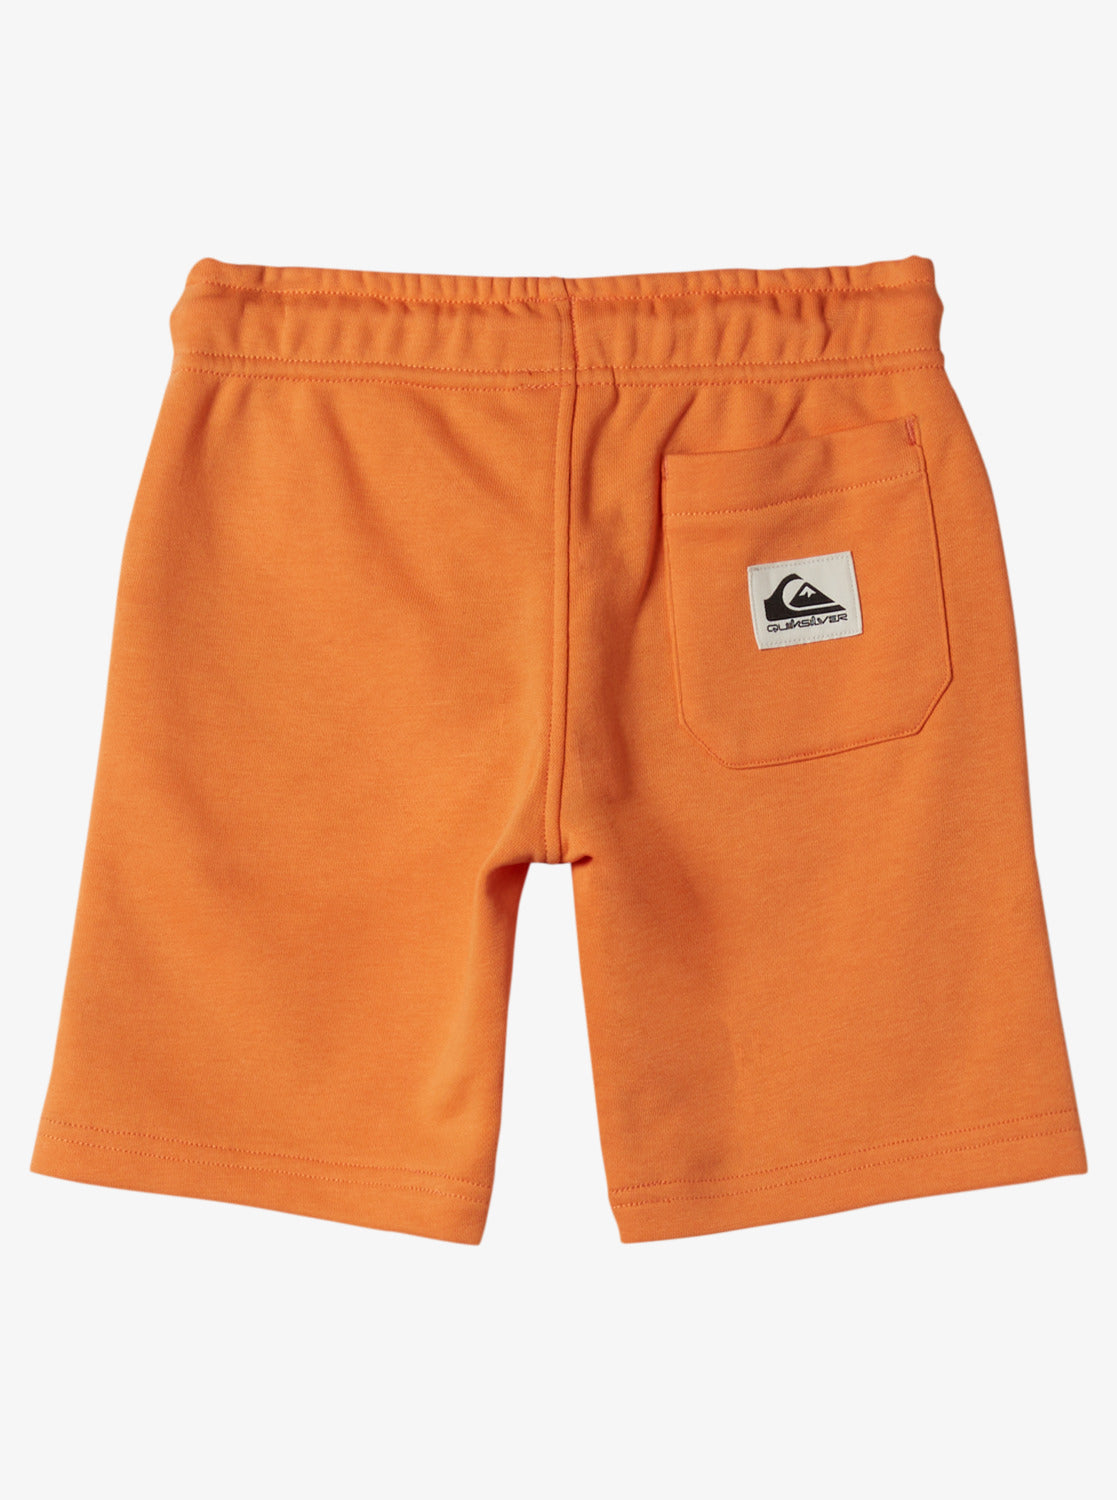 Quiksilver Easy Day Boys Sweat Shorts in Tangerine